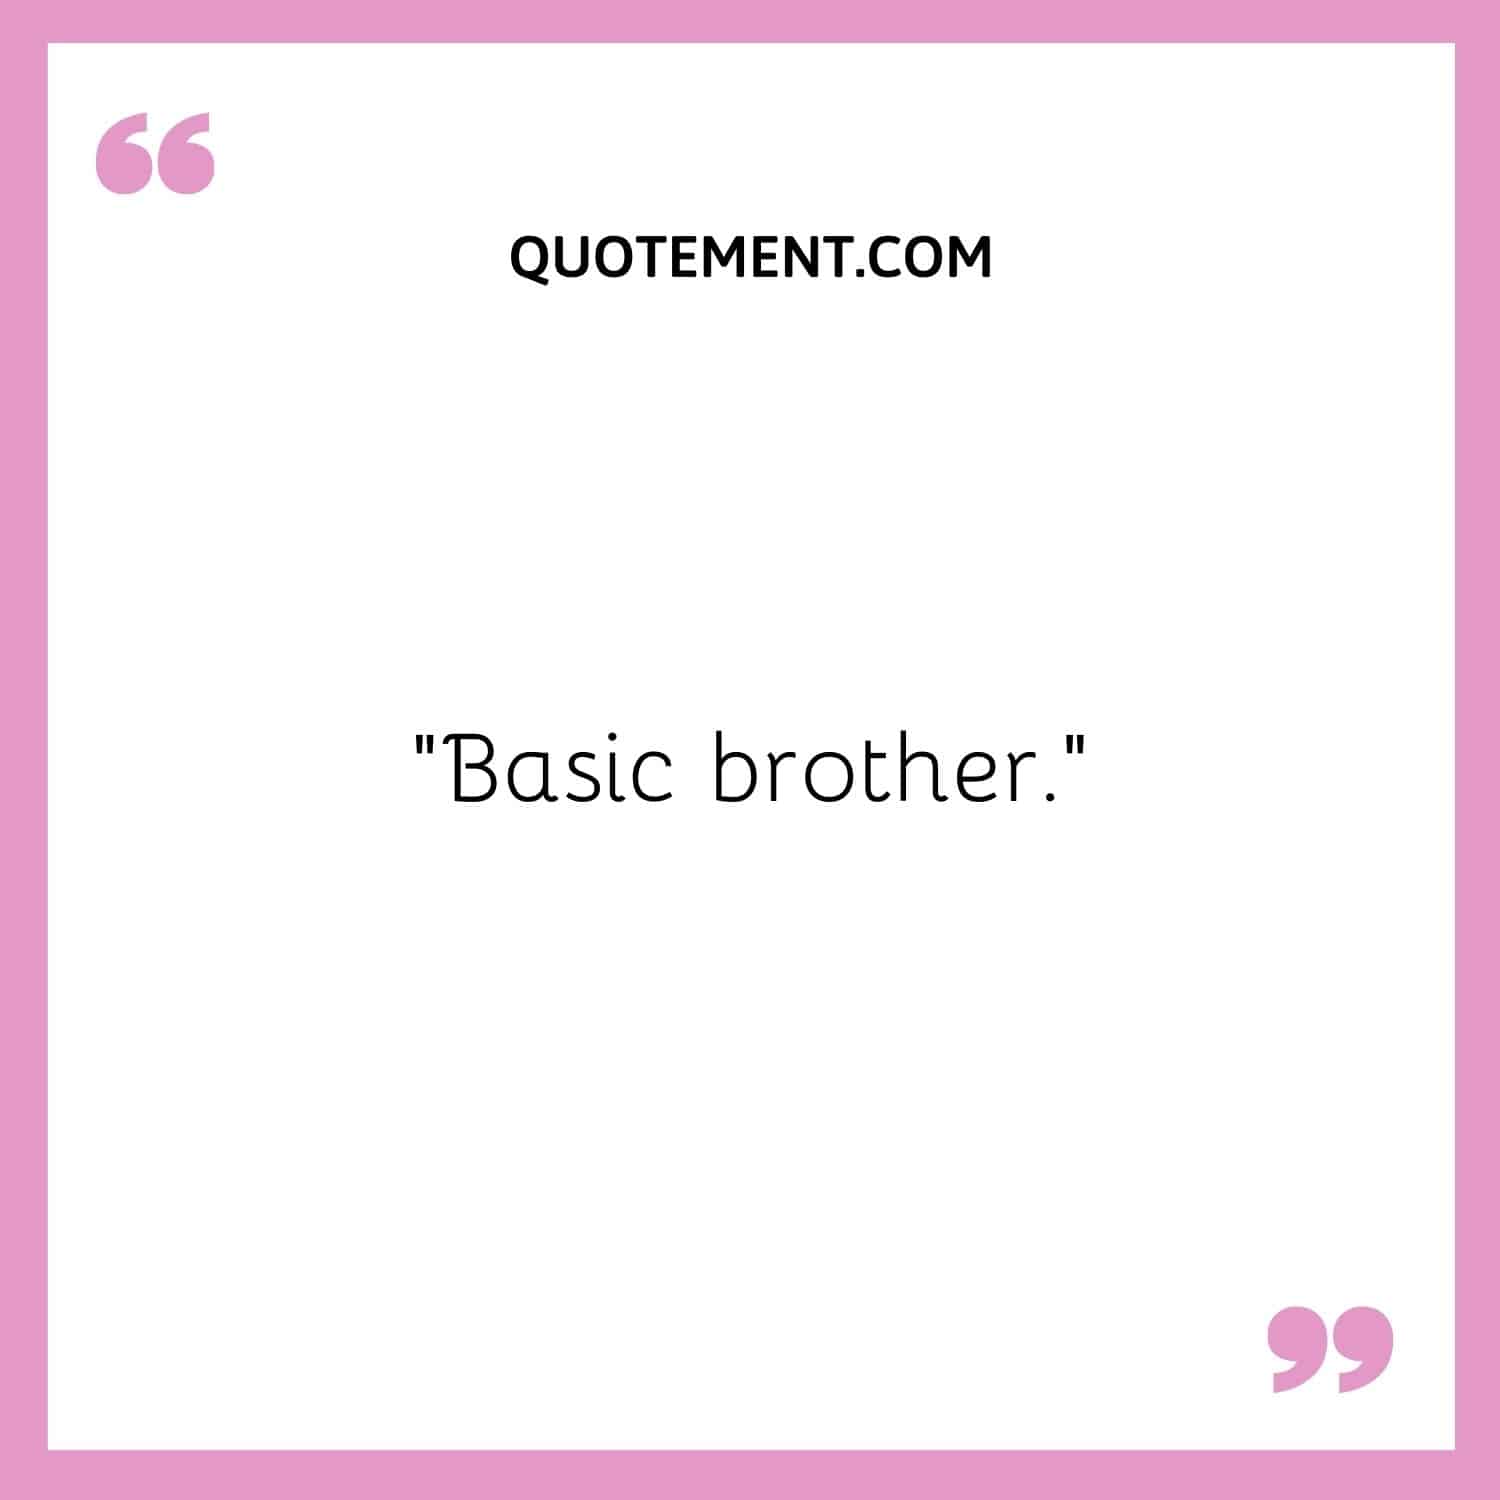 Basic brother.